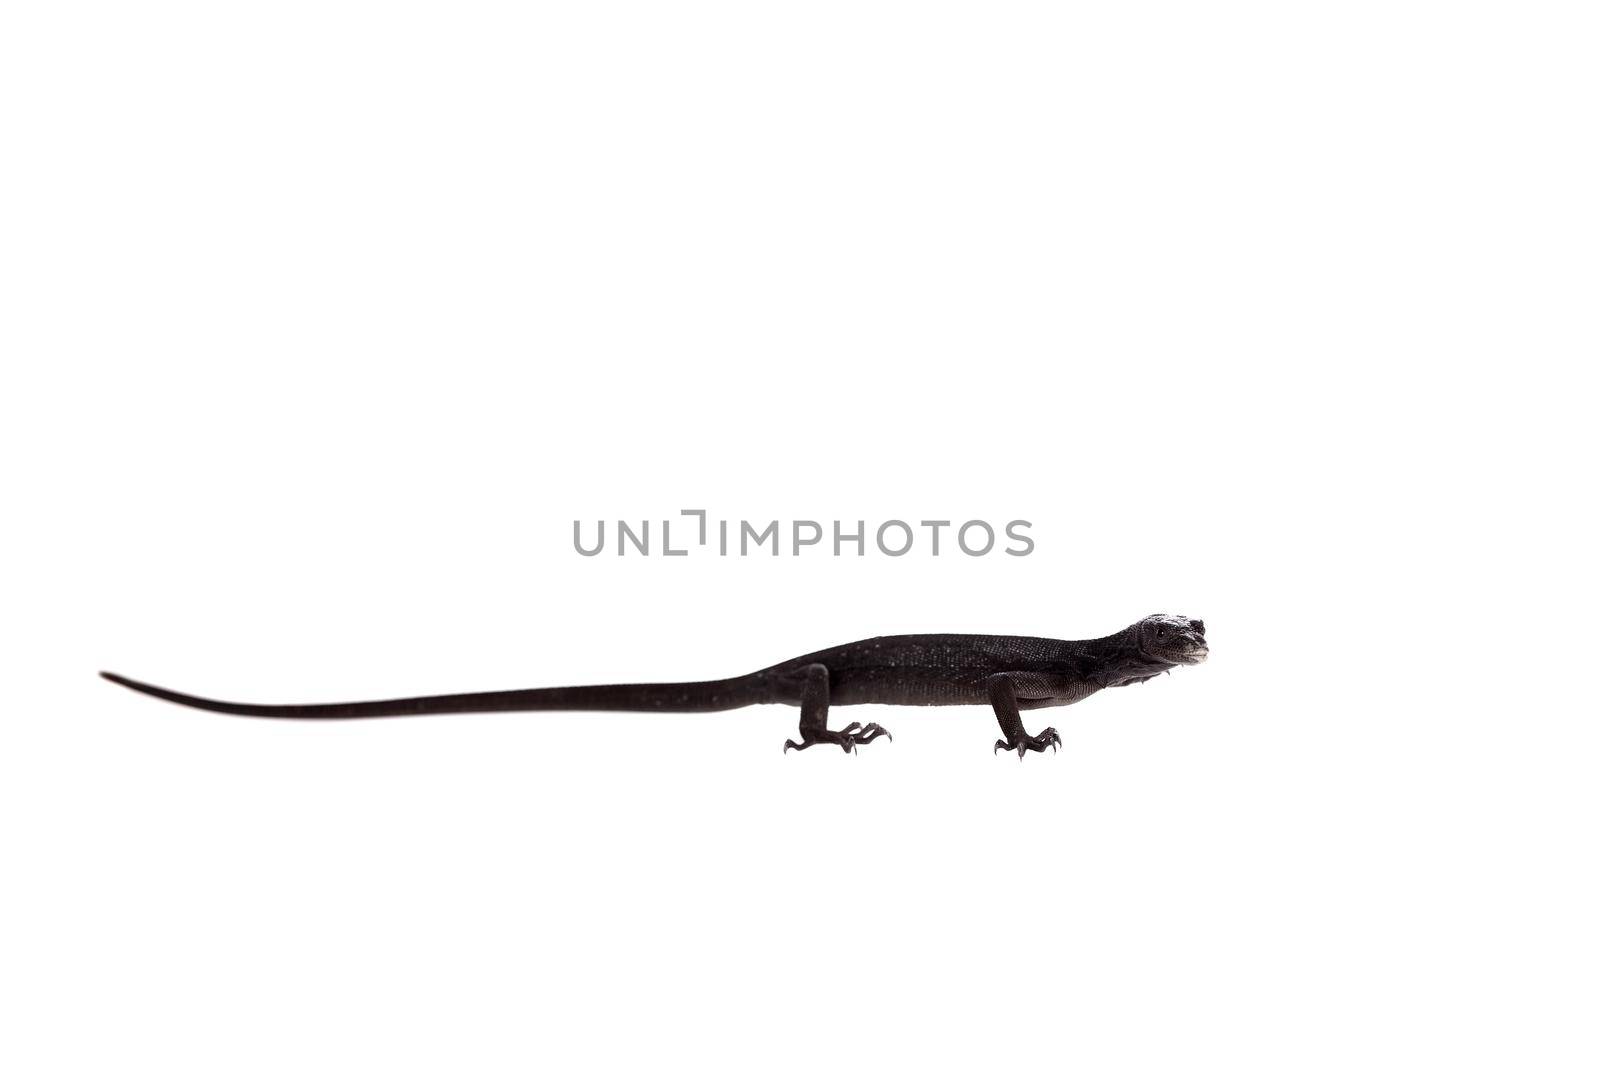 Black tree monitor lizard on white by RosaJay